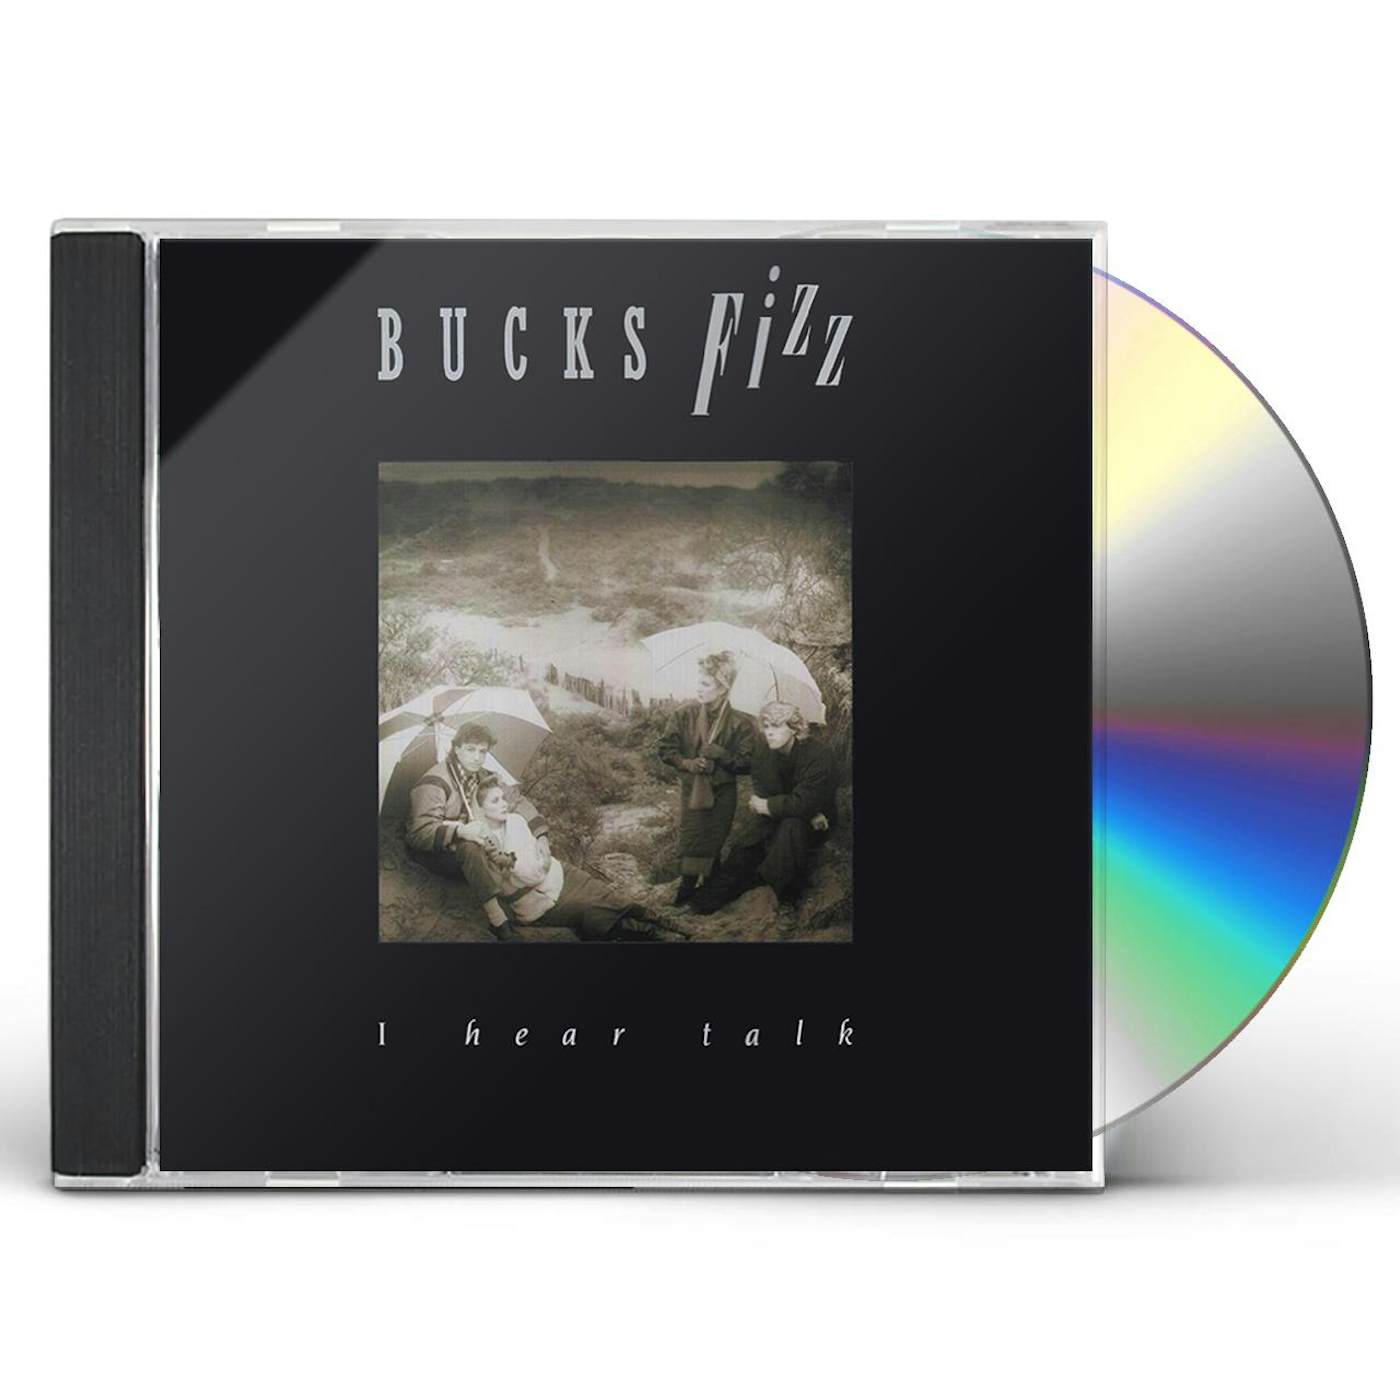 Bucks Fizz I HEAR TALK: DEFINITIVE EDITION CD